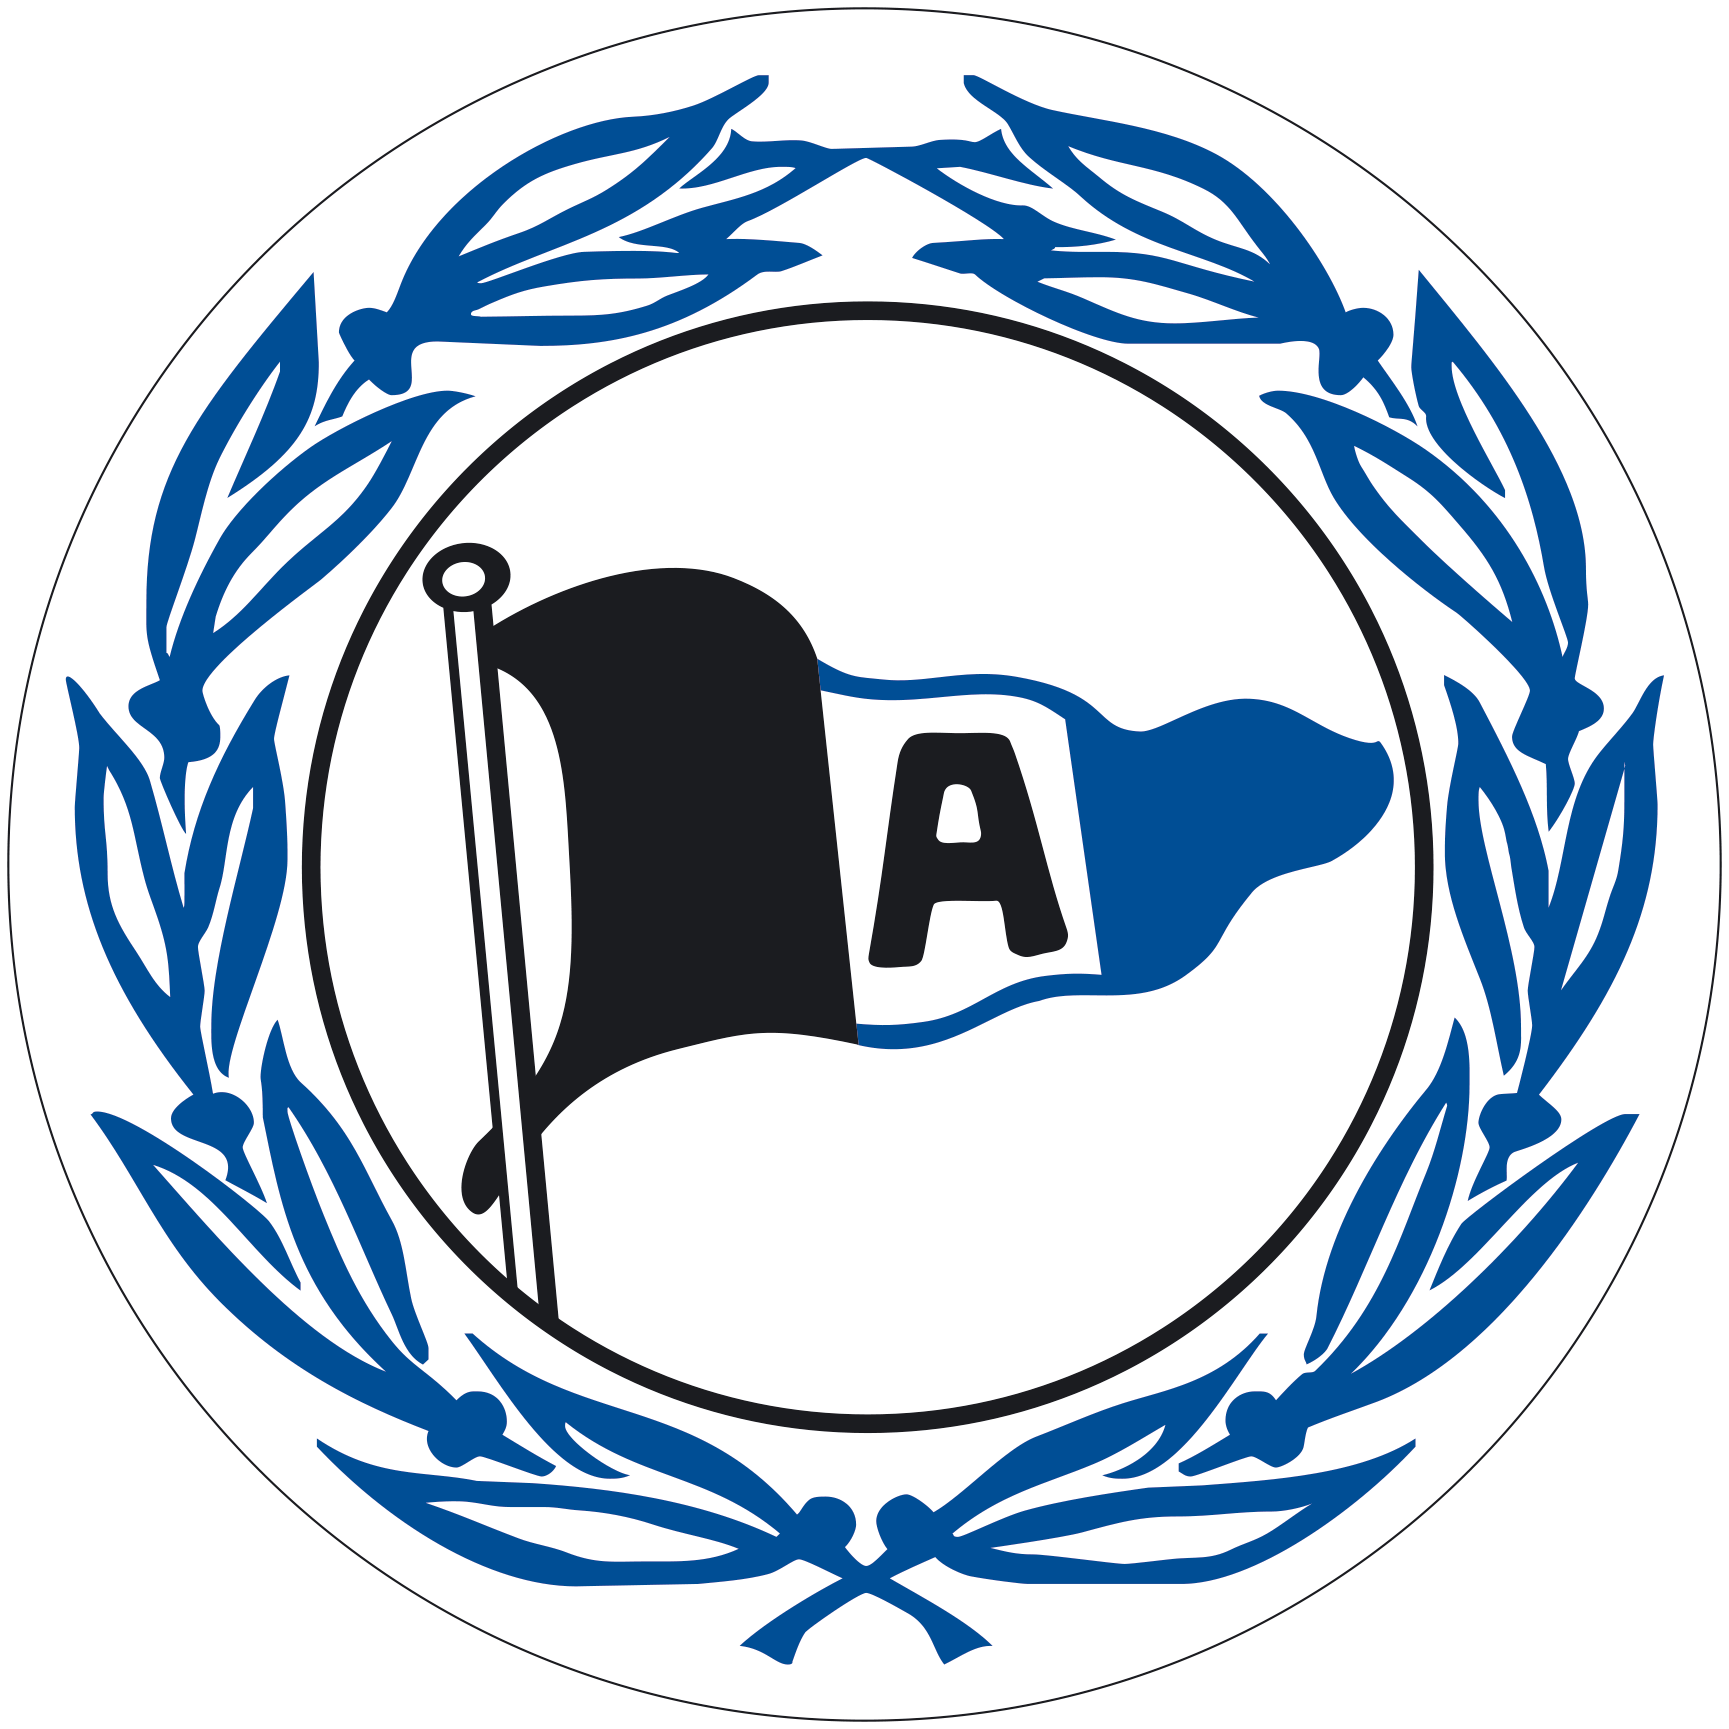 Vereinswappen - Arminia Bielefeld